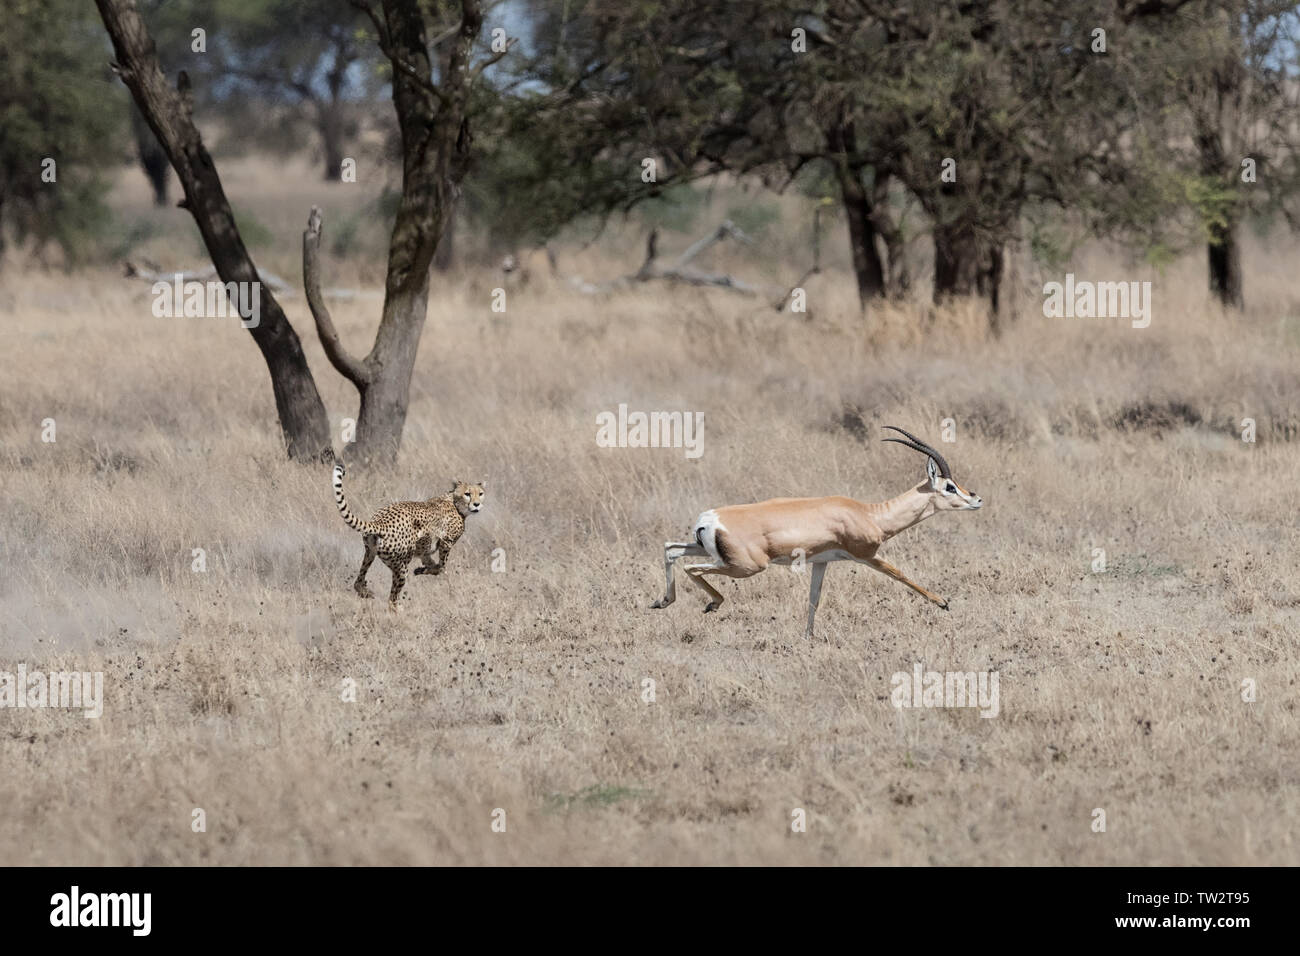 Gepard (Acinonyx jubatus) Jagd ein gewährt Gazelle, die Austritt erfassen, Ndutu, Tansania Stockfoto